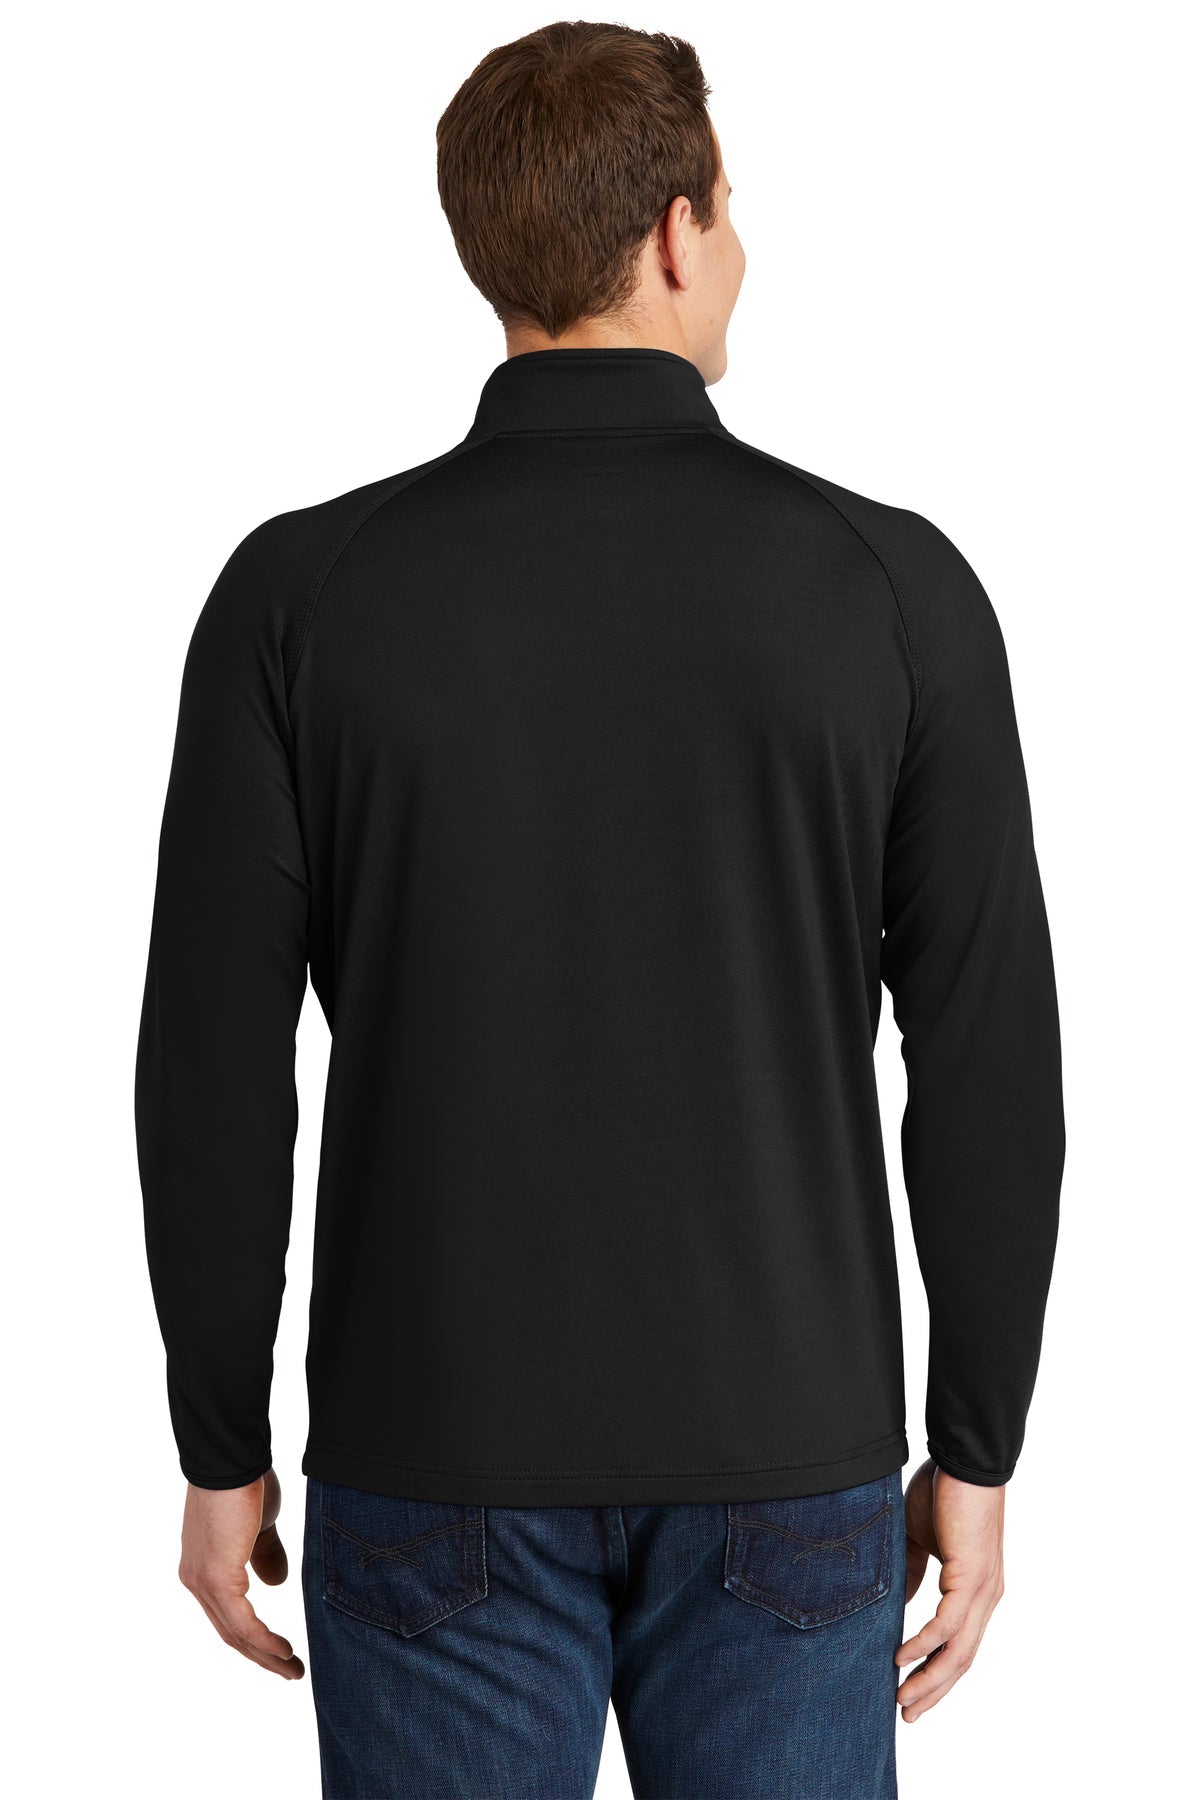 sport-tek_st850 _black_company_logo_sweatshirts